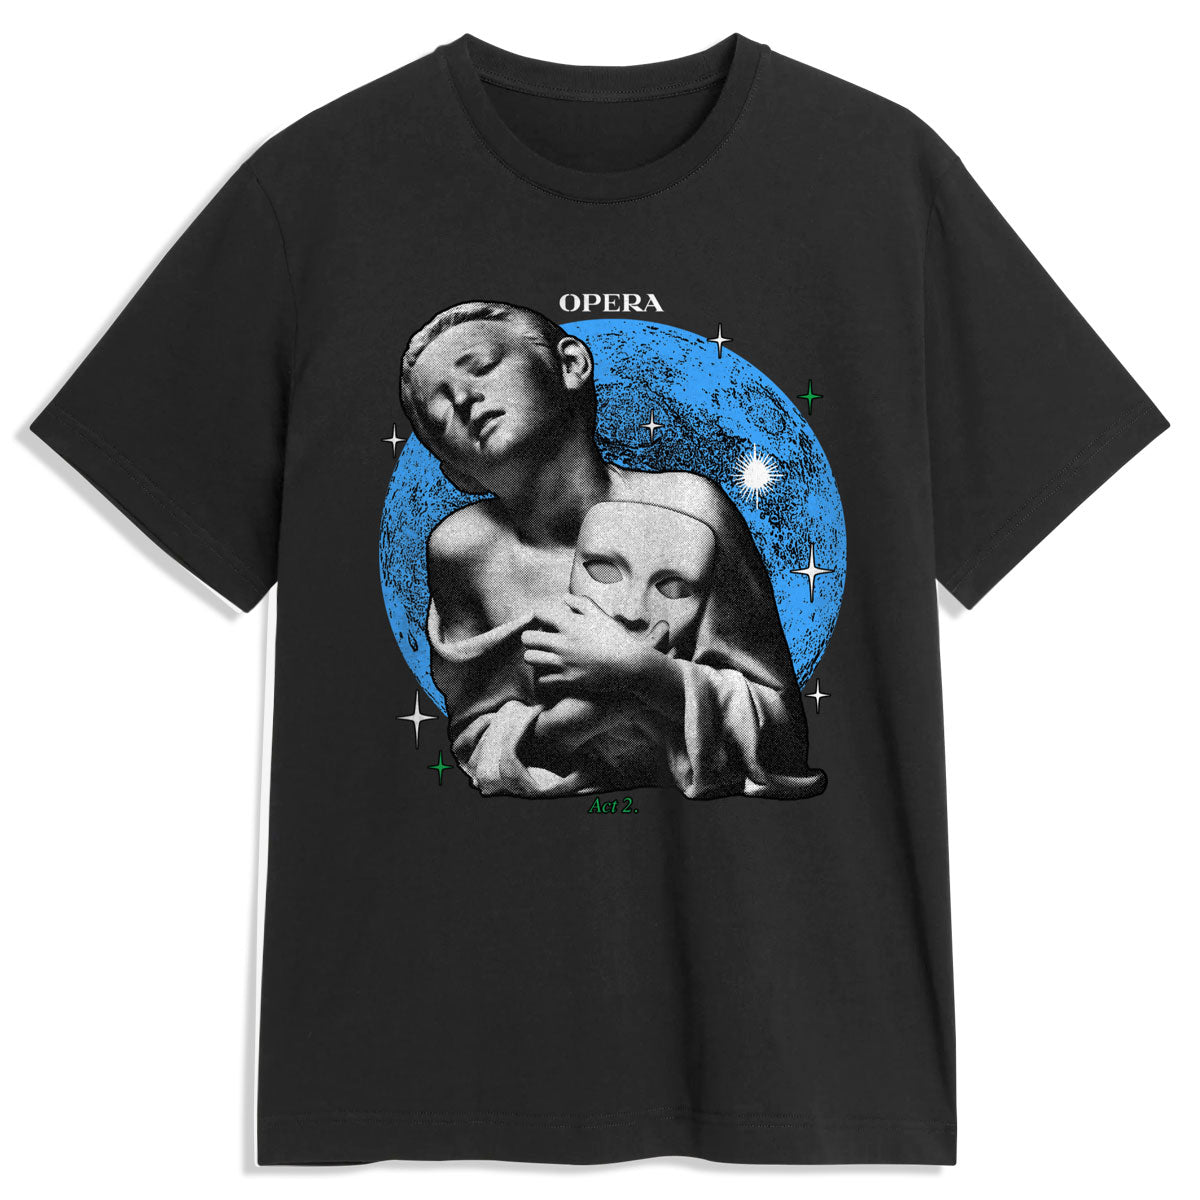 Opera Grasp T-Shirt - Black image 1